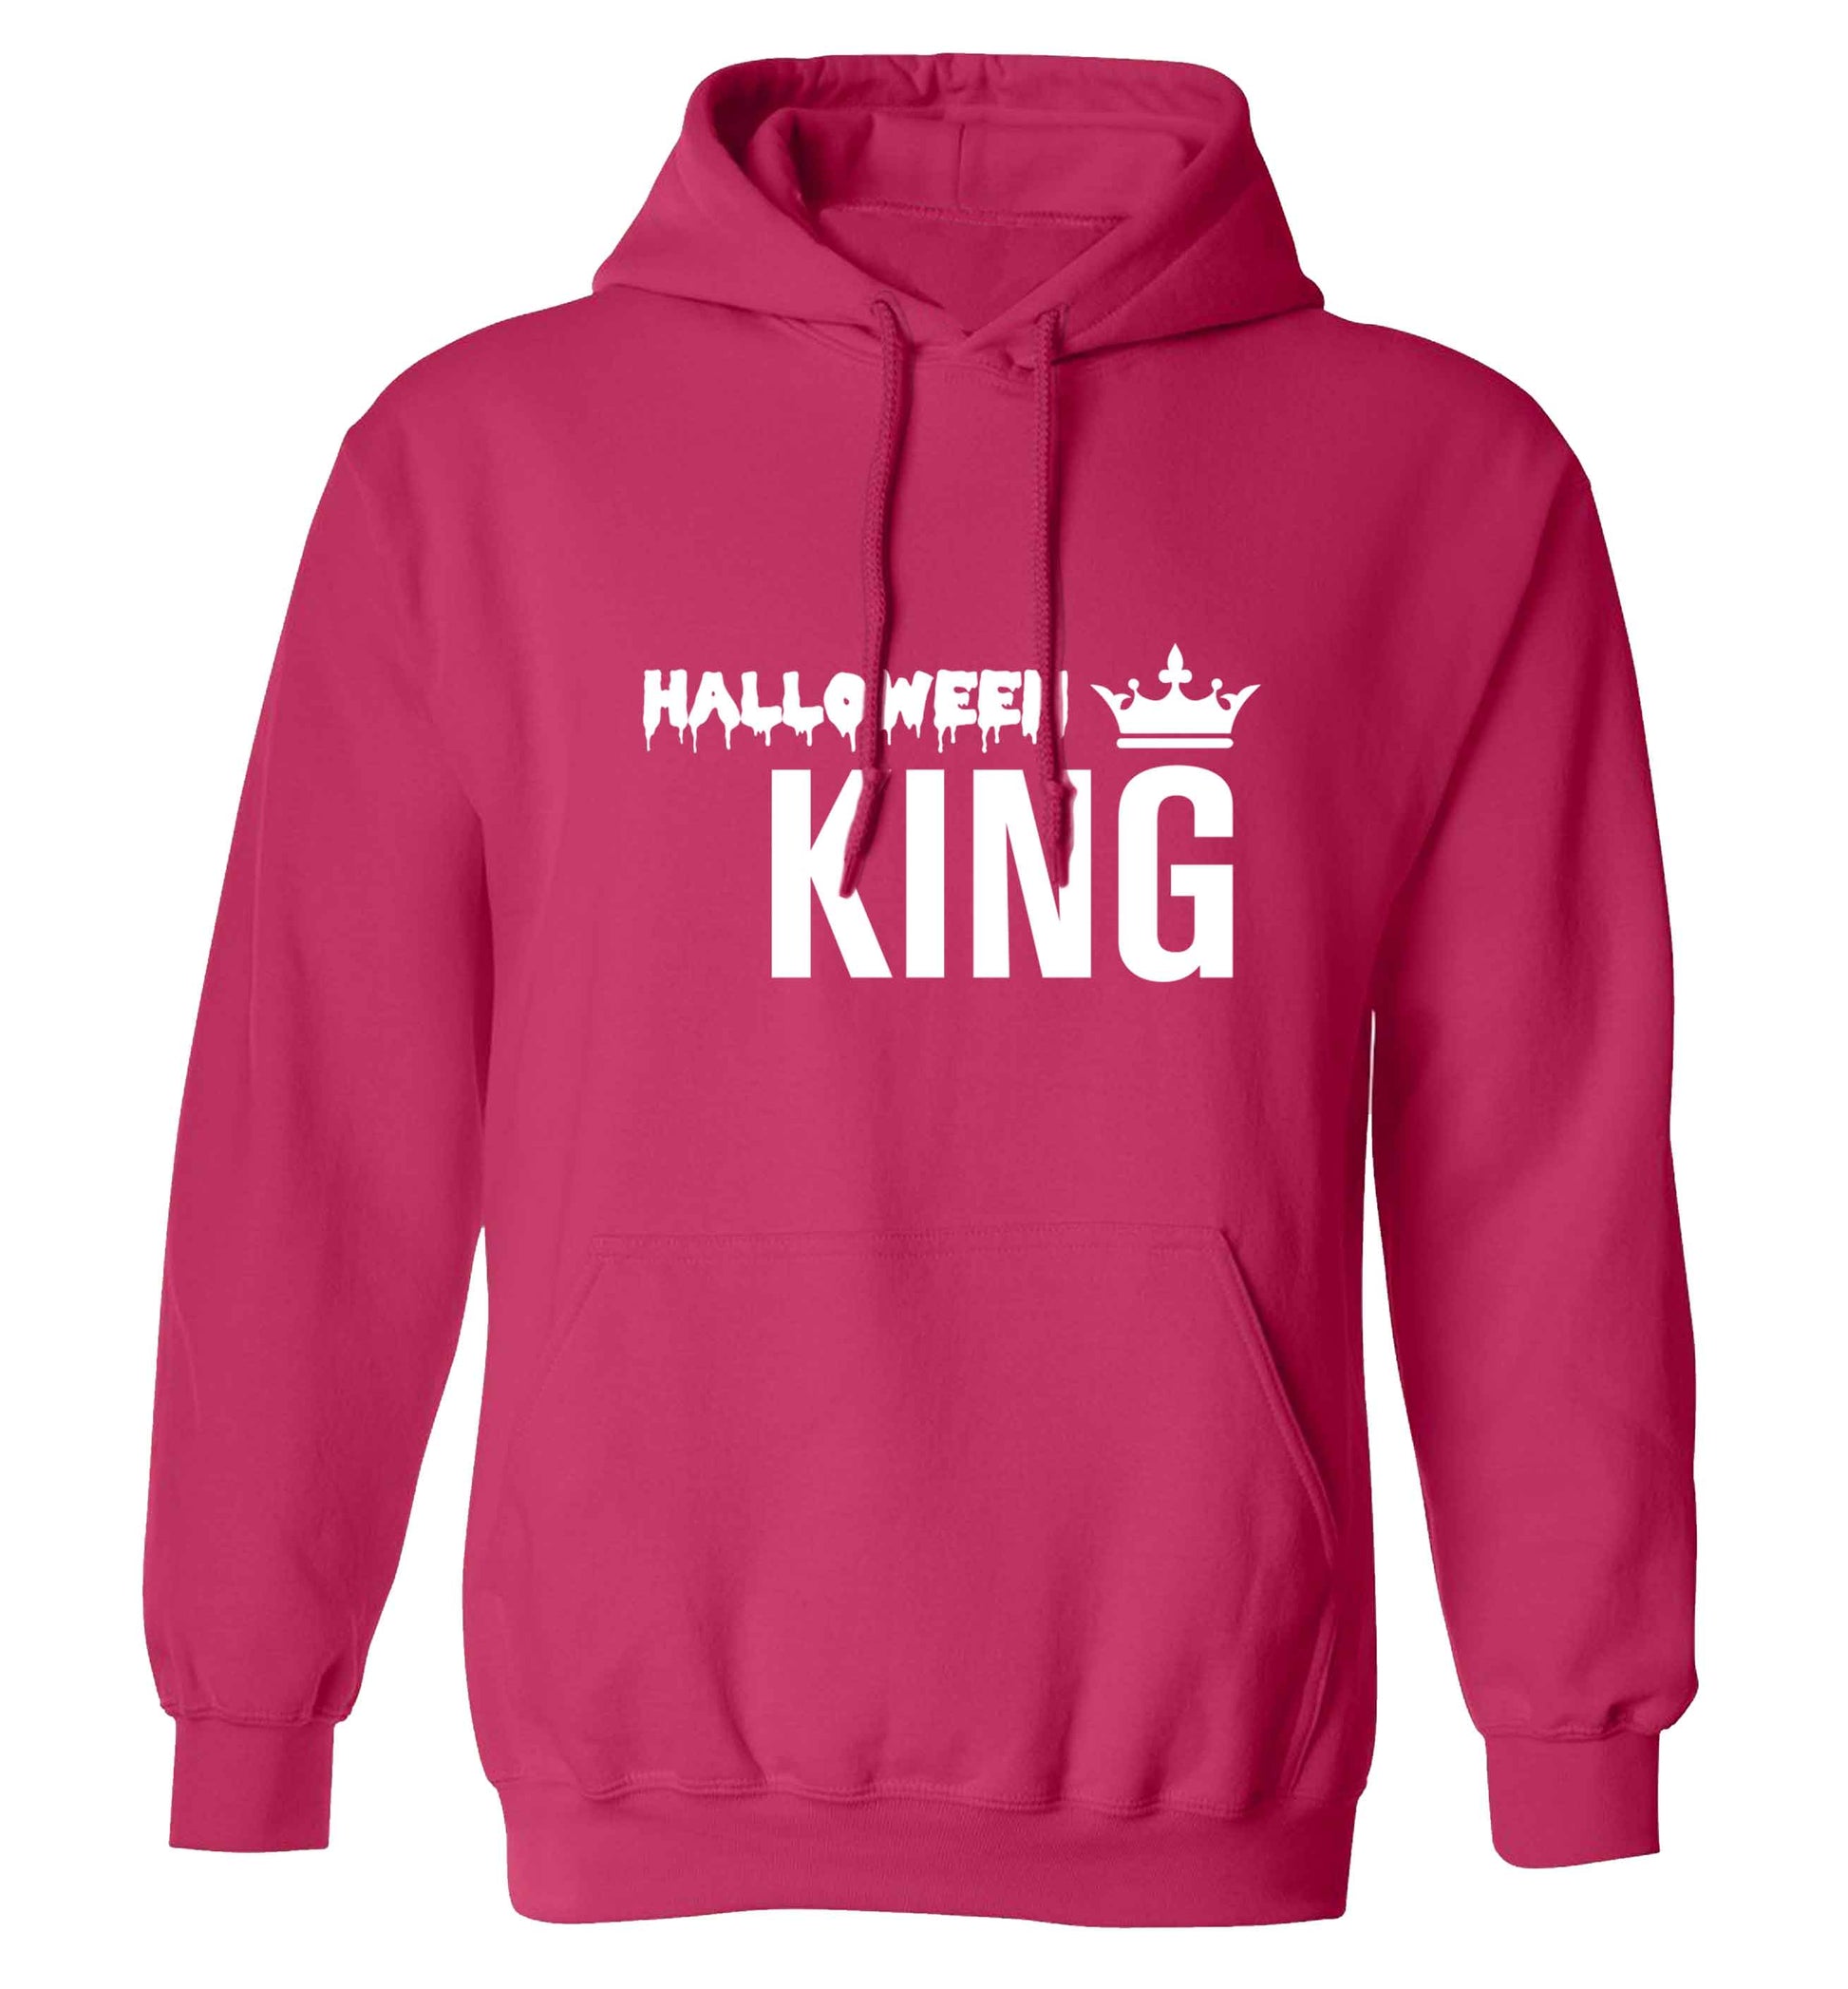 Halloween king adults unisex pink hoodie 2XL